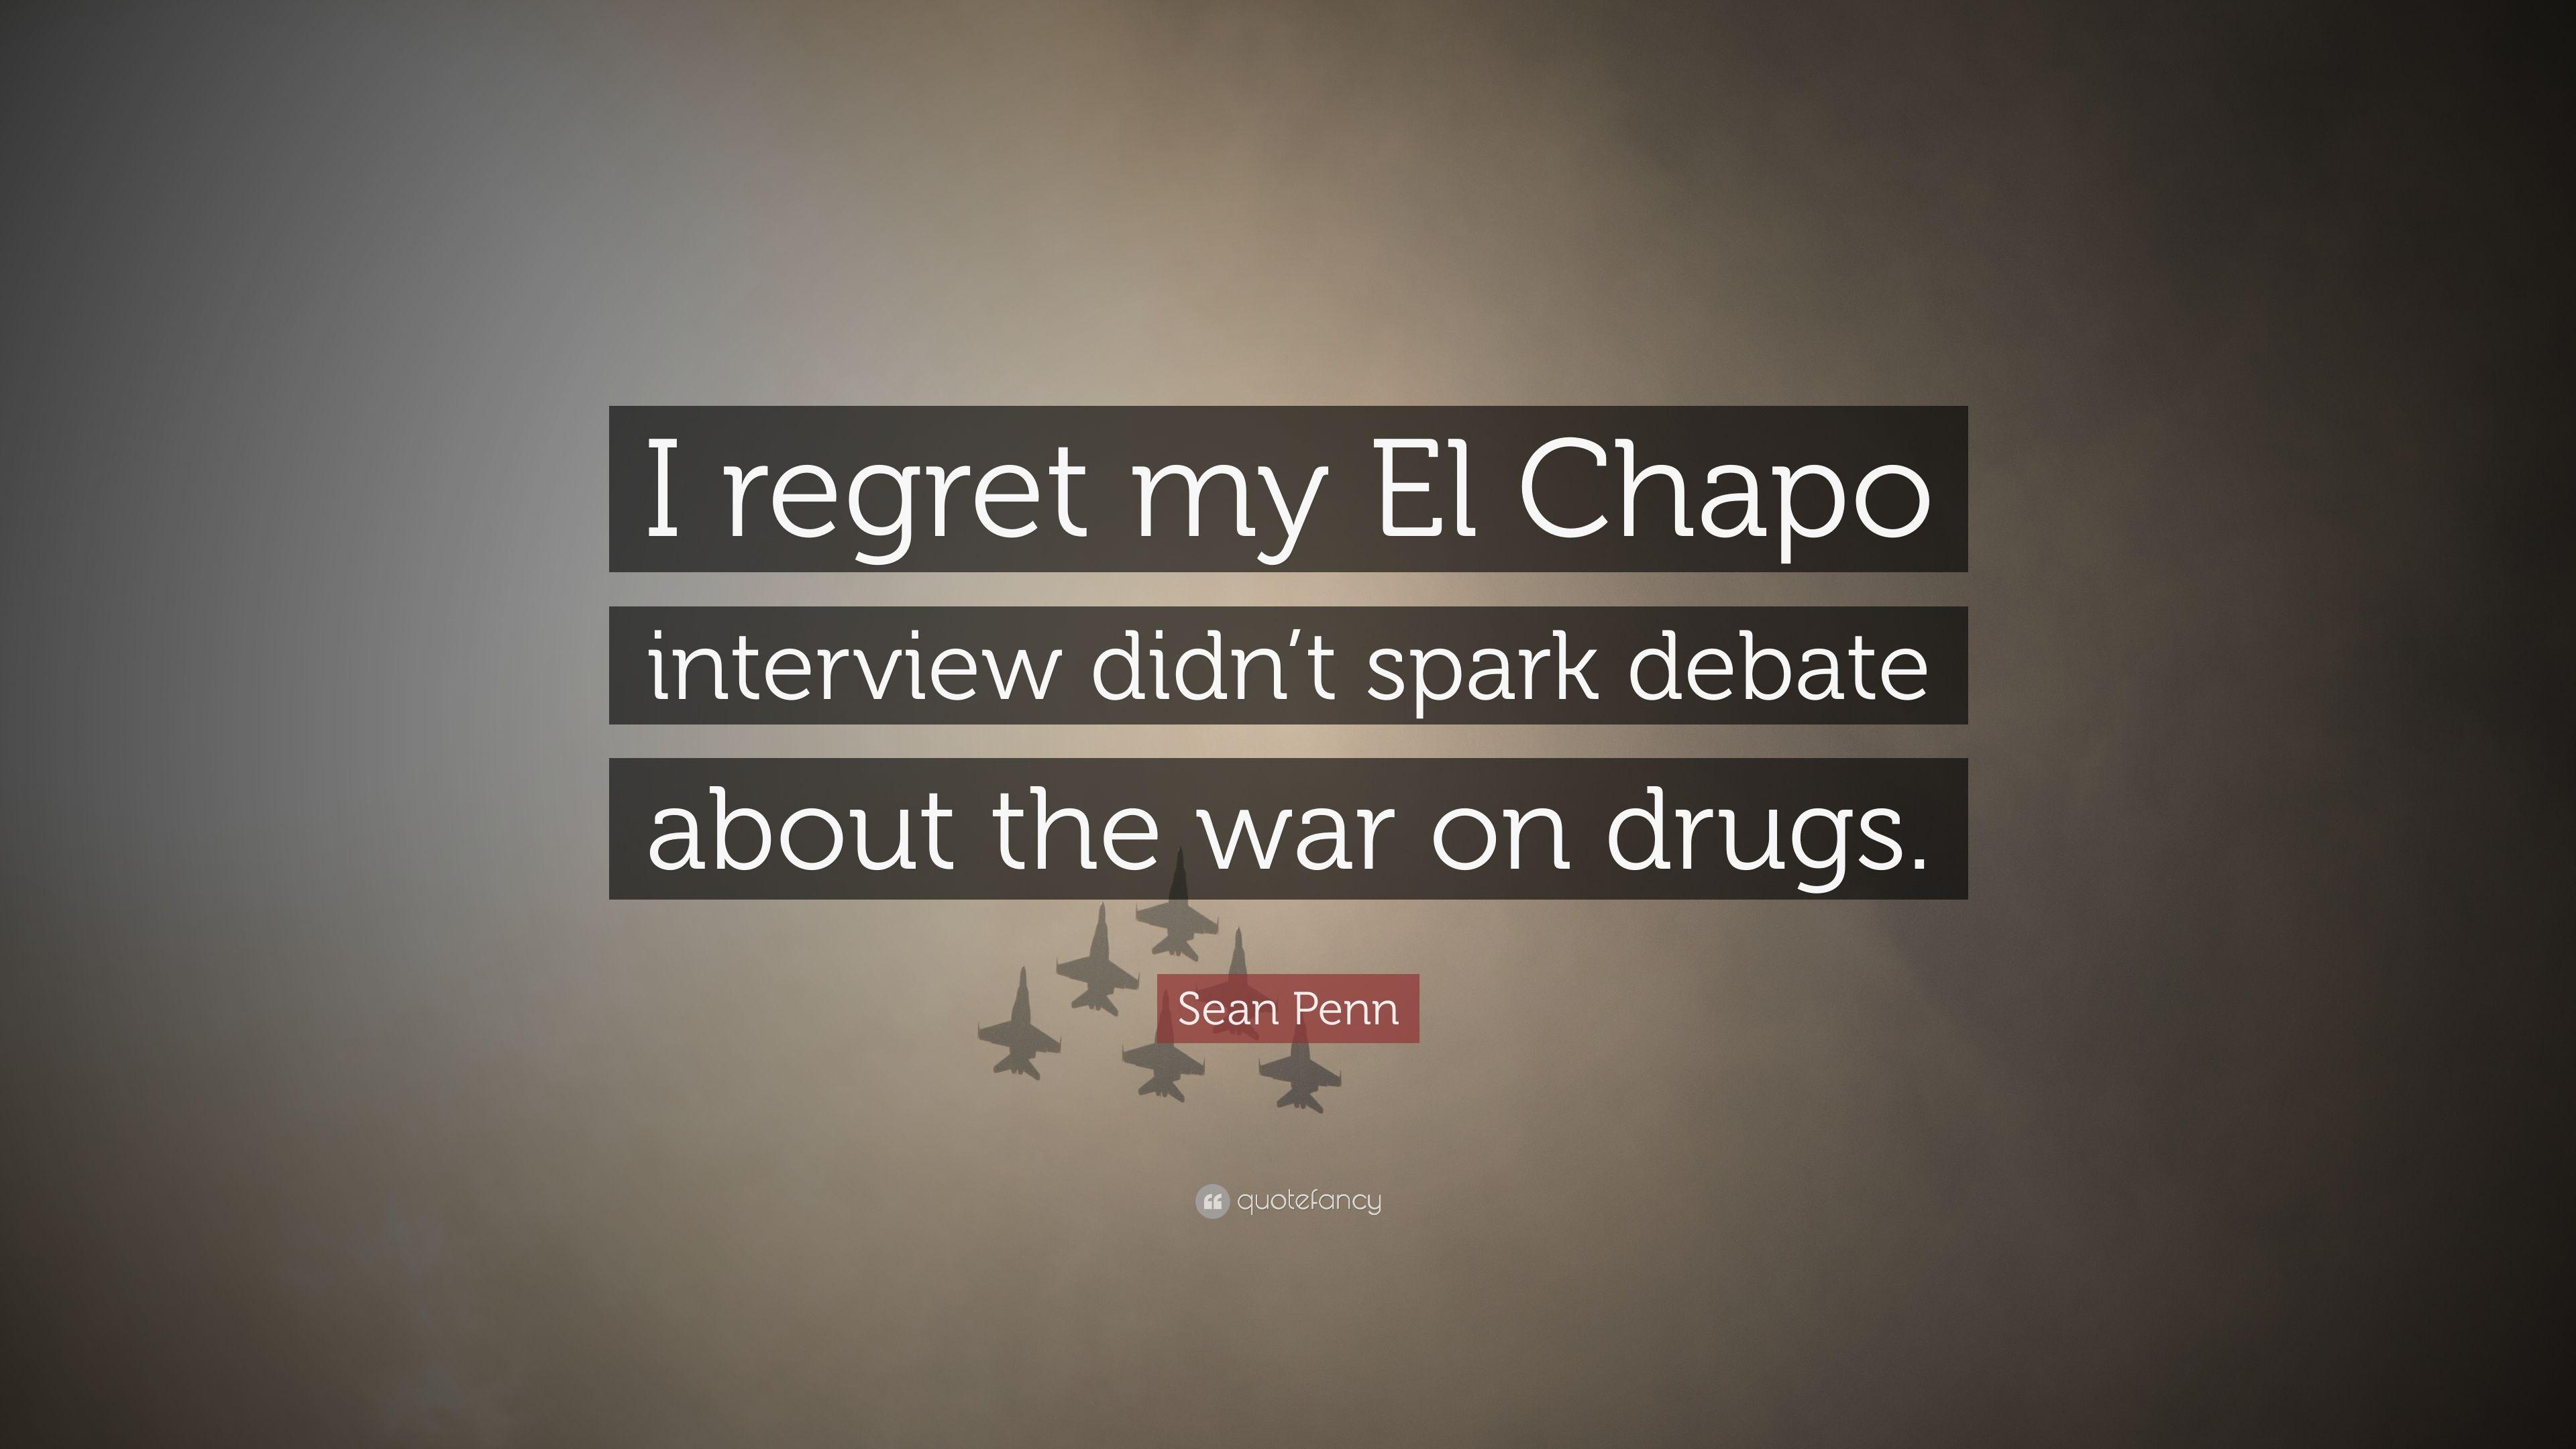 Sean Penn Quote: “I regret my El Chapo interview didn't spark